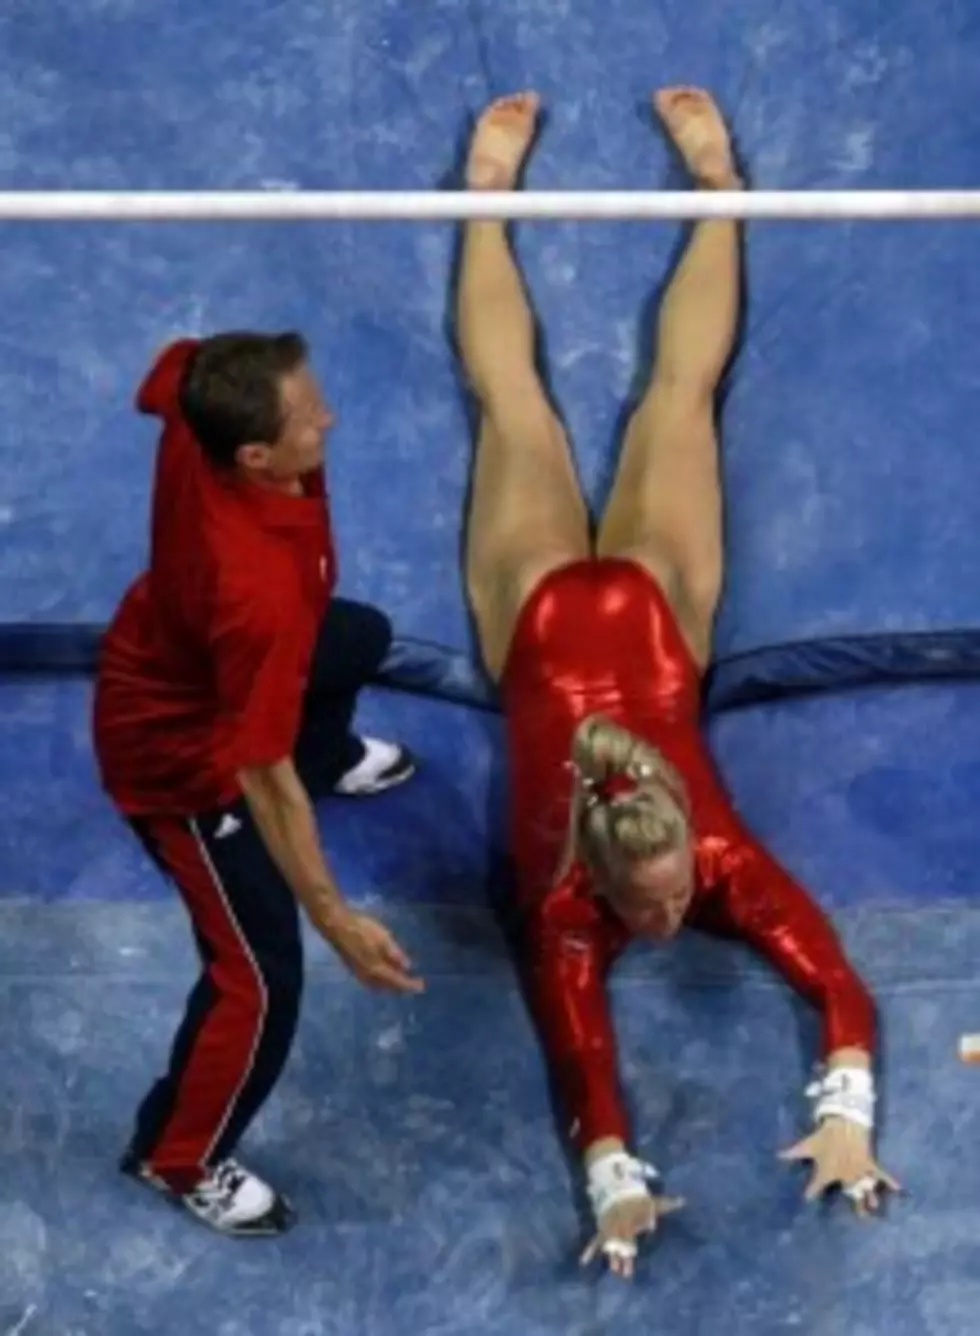 U.S. Gymnast Nastia Liukin Takes A Hard Fall At 2012 Olympic Trials [VIDEO]